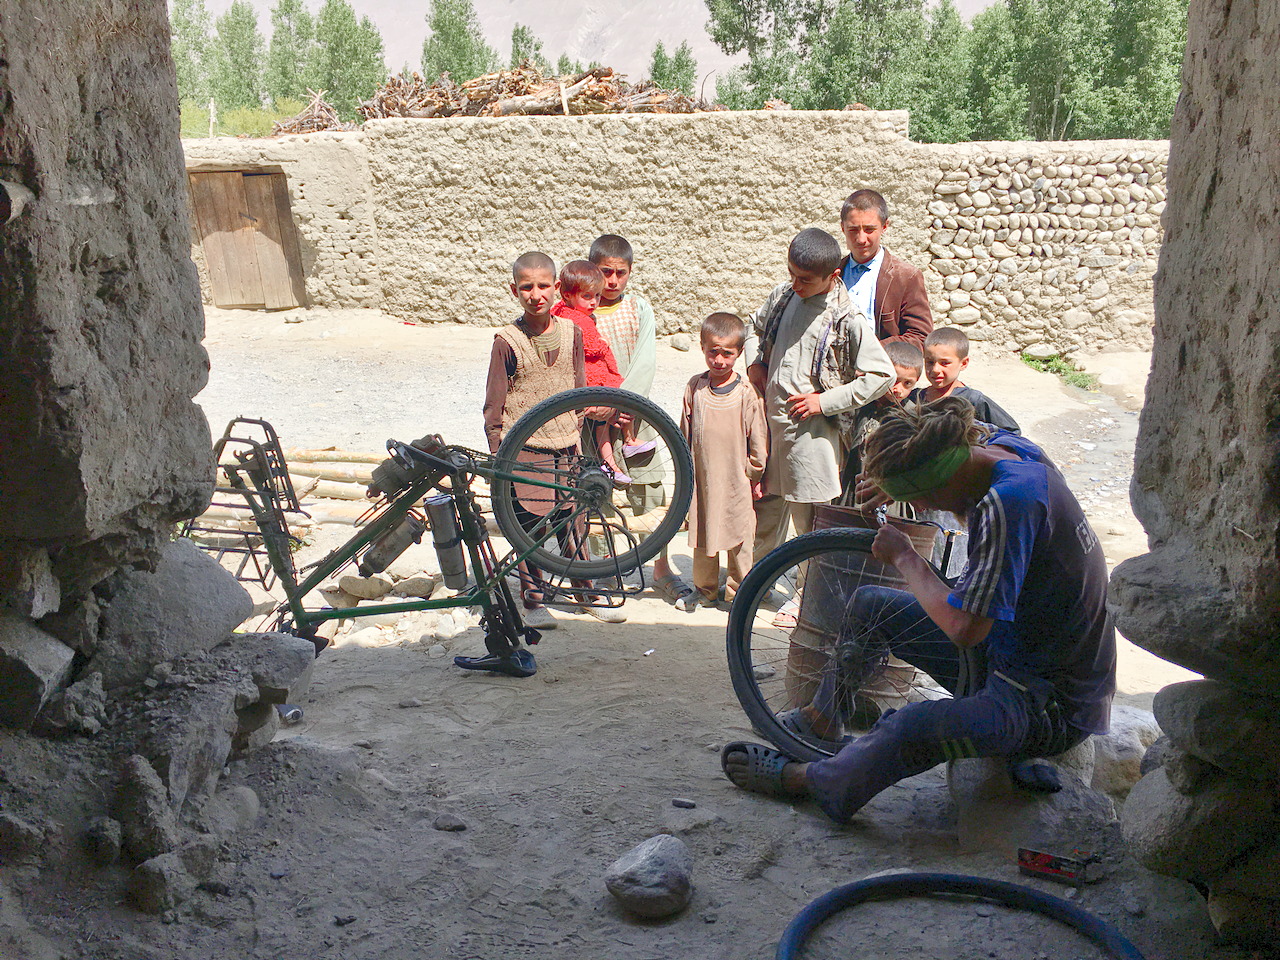 Fixing a flat tire in Khandud